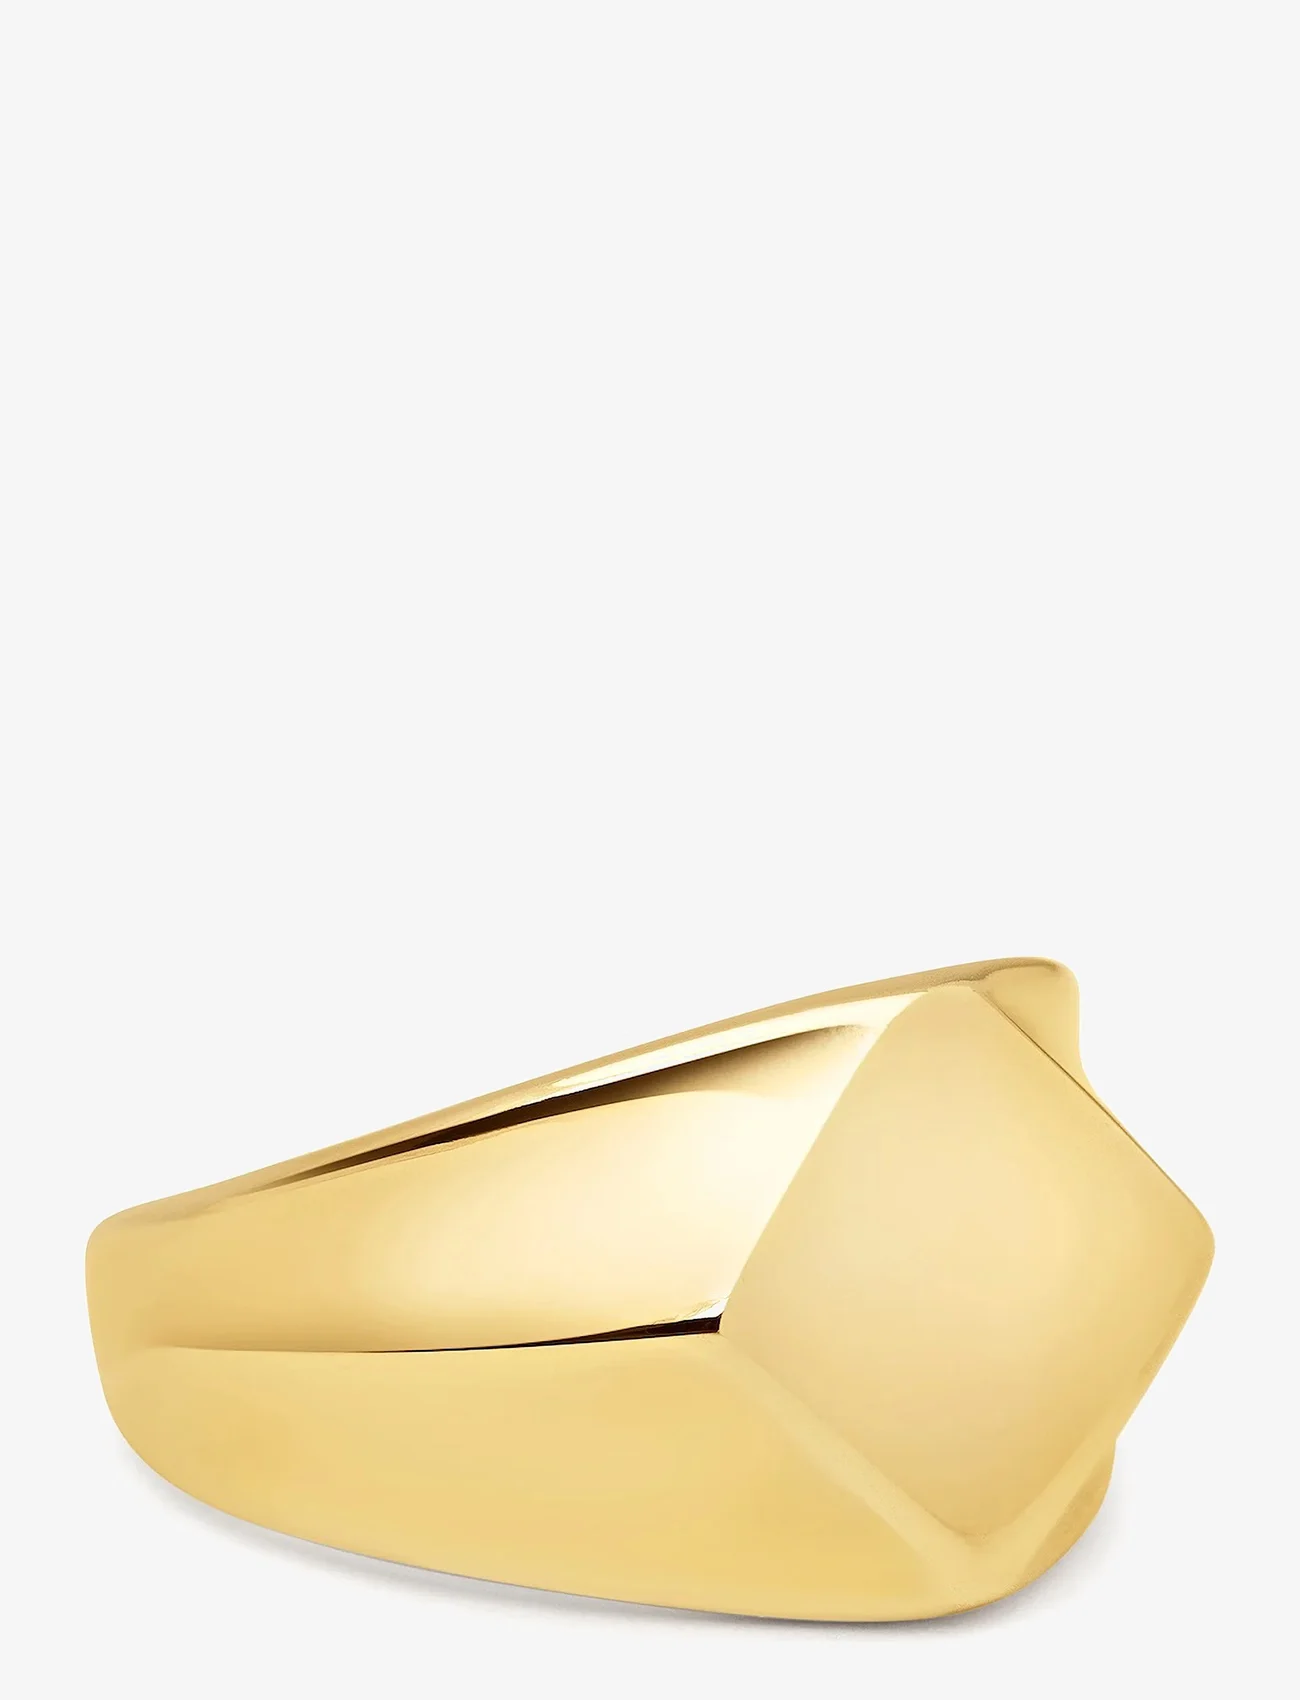 Nialaya - Men's Squared Stainless Steel Ring with Gold Plating - verjaardagscadeaus - gold - 0